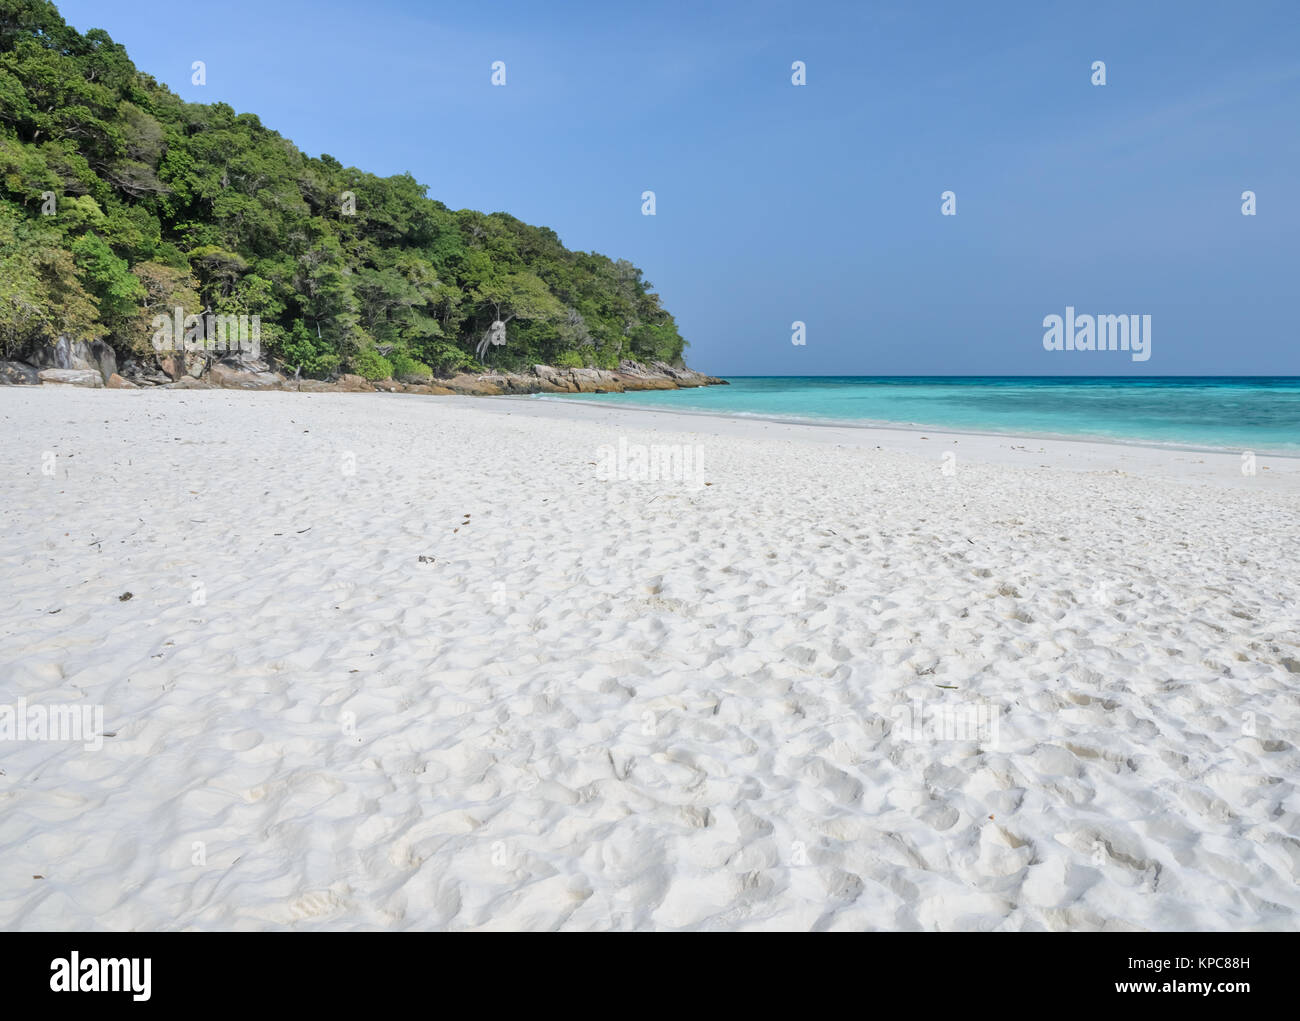 Idyllic white sand beach of Andaman Sea in Thailand Stock Photo